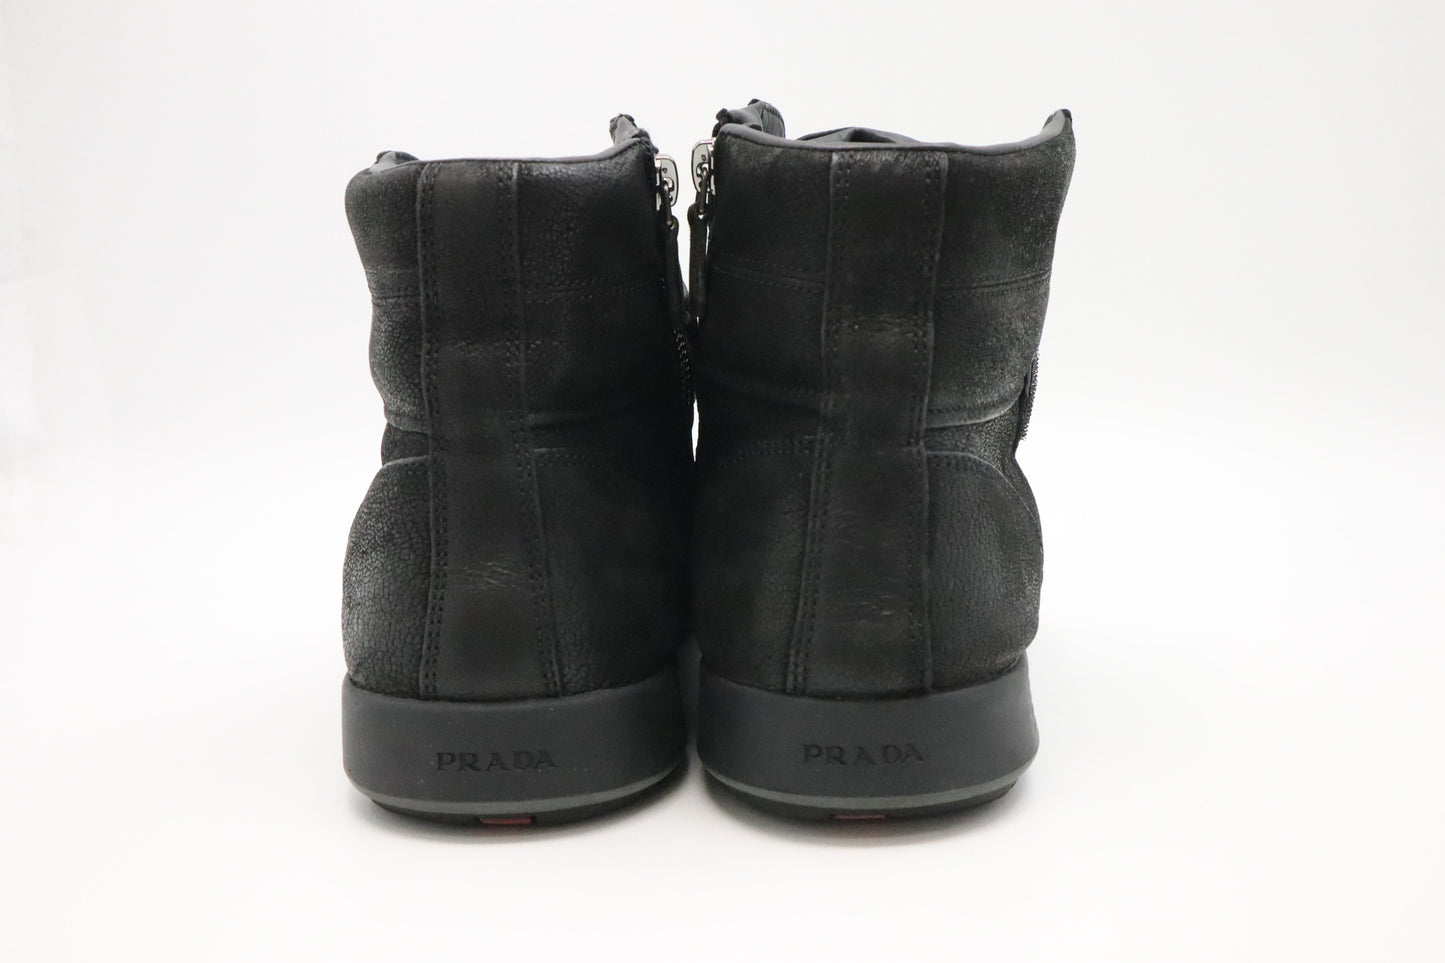 Prada Sneakers in Black Leather